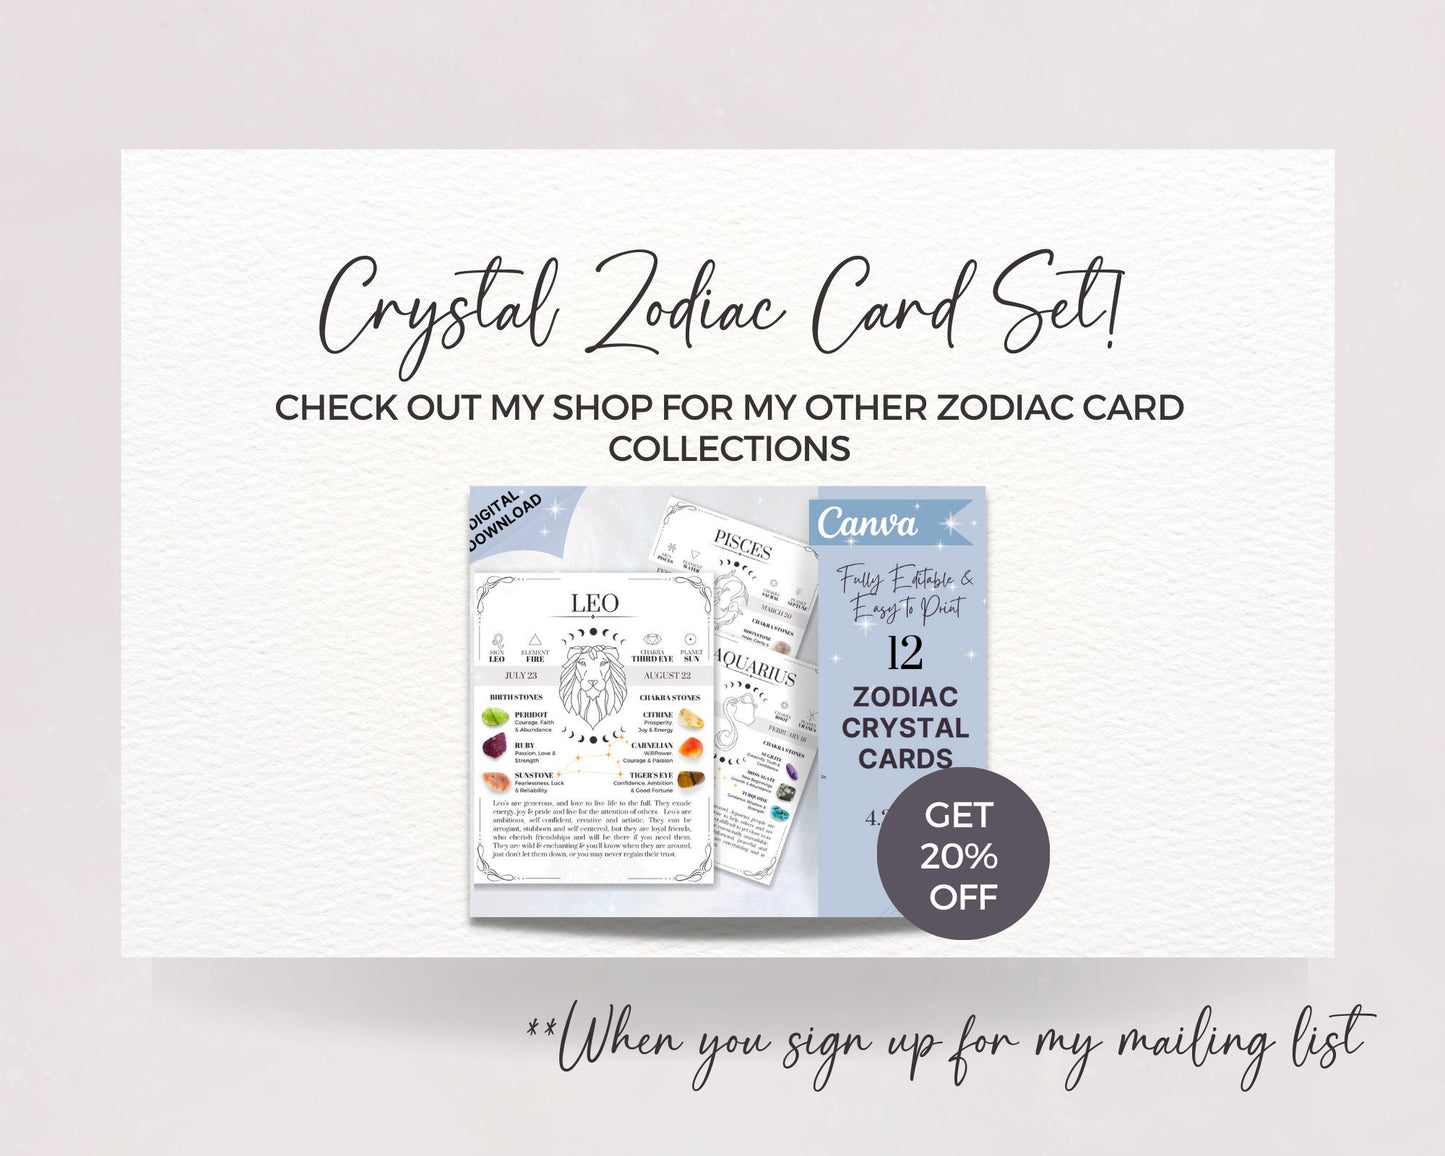 Printable Zodiac Crystals Cards- 12 Watercolor Art Horoscope & Crystal Cards, Editable Astrology Cards/Star Sign Cards, Zodiac Cards Canva